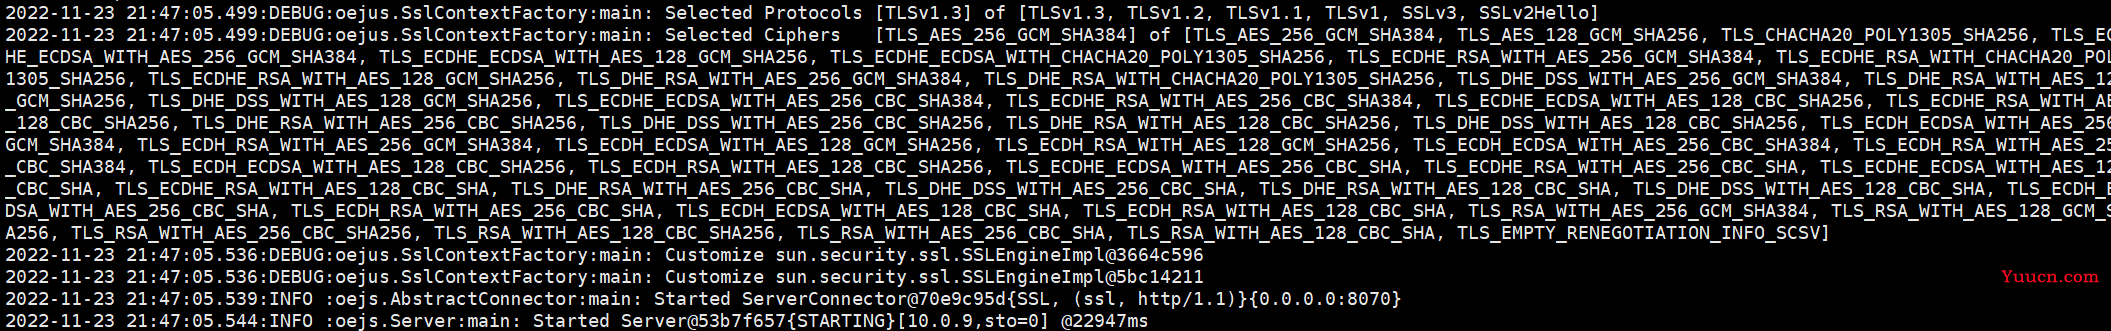 TLS版本及CipherSuites确认及设置